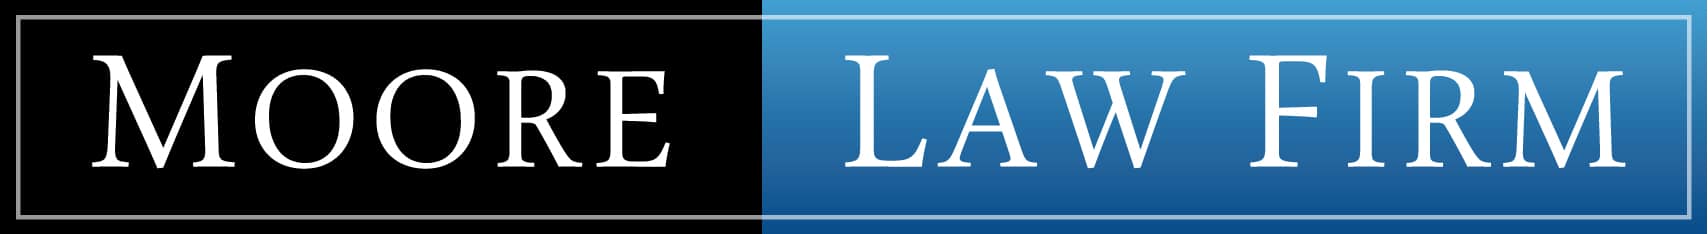 Moore-Law-Firm-Logo-Online.jpg